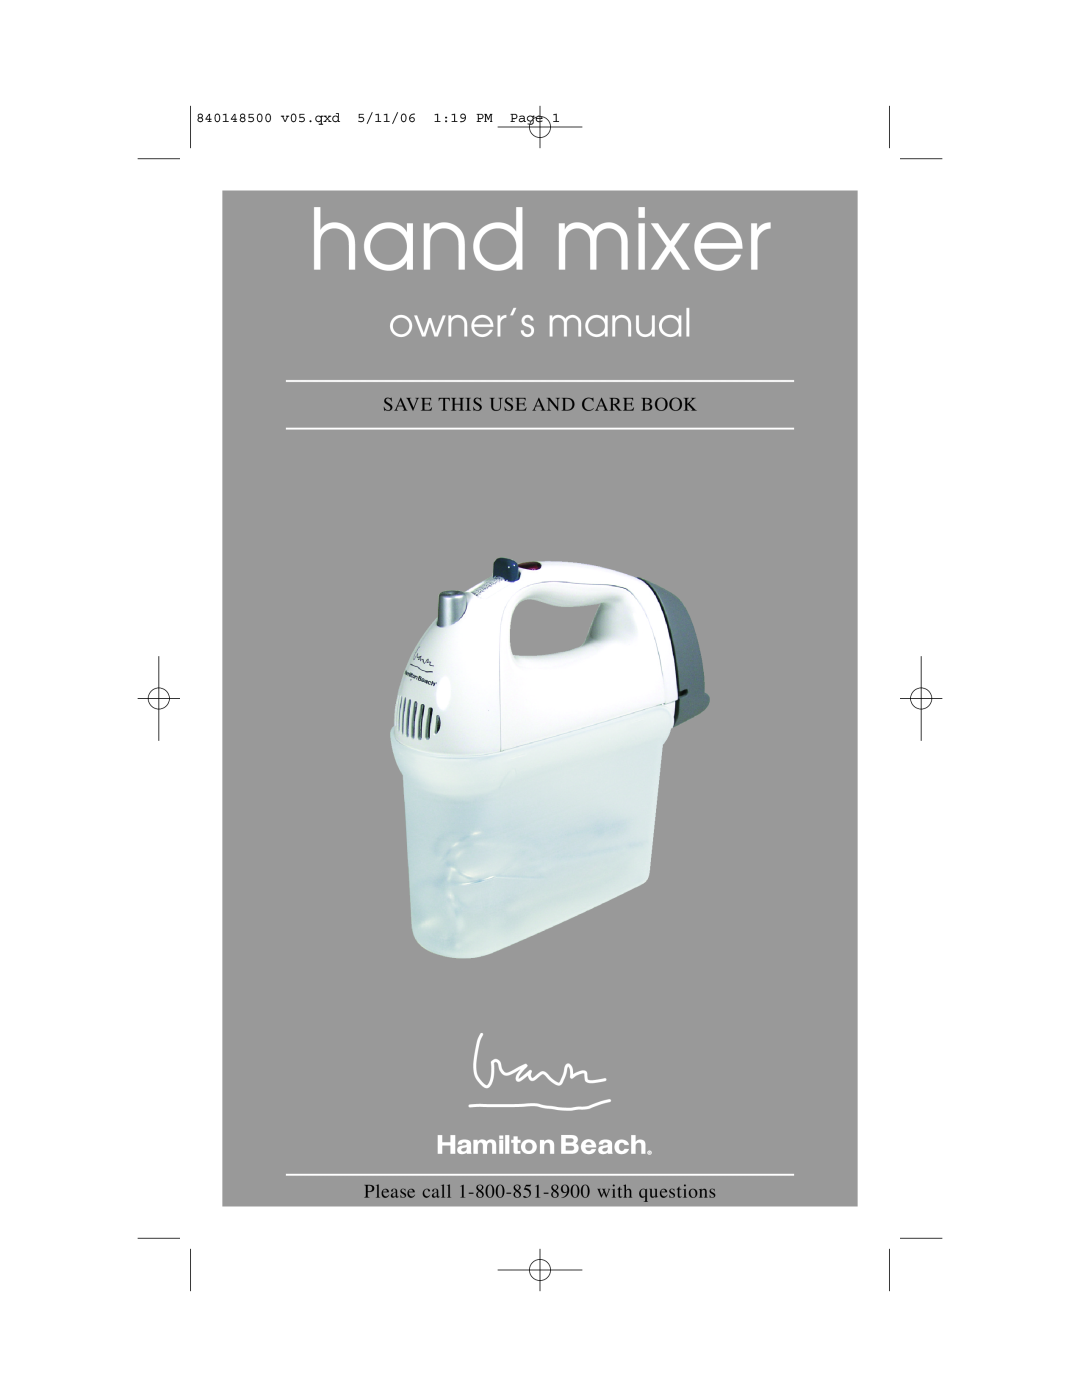 Hamilton Beach owner manual hand mixer, 840148500 v05.qxd 5/11/06 119 PM Page 